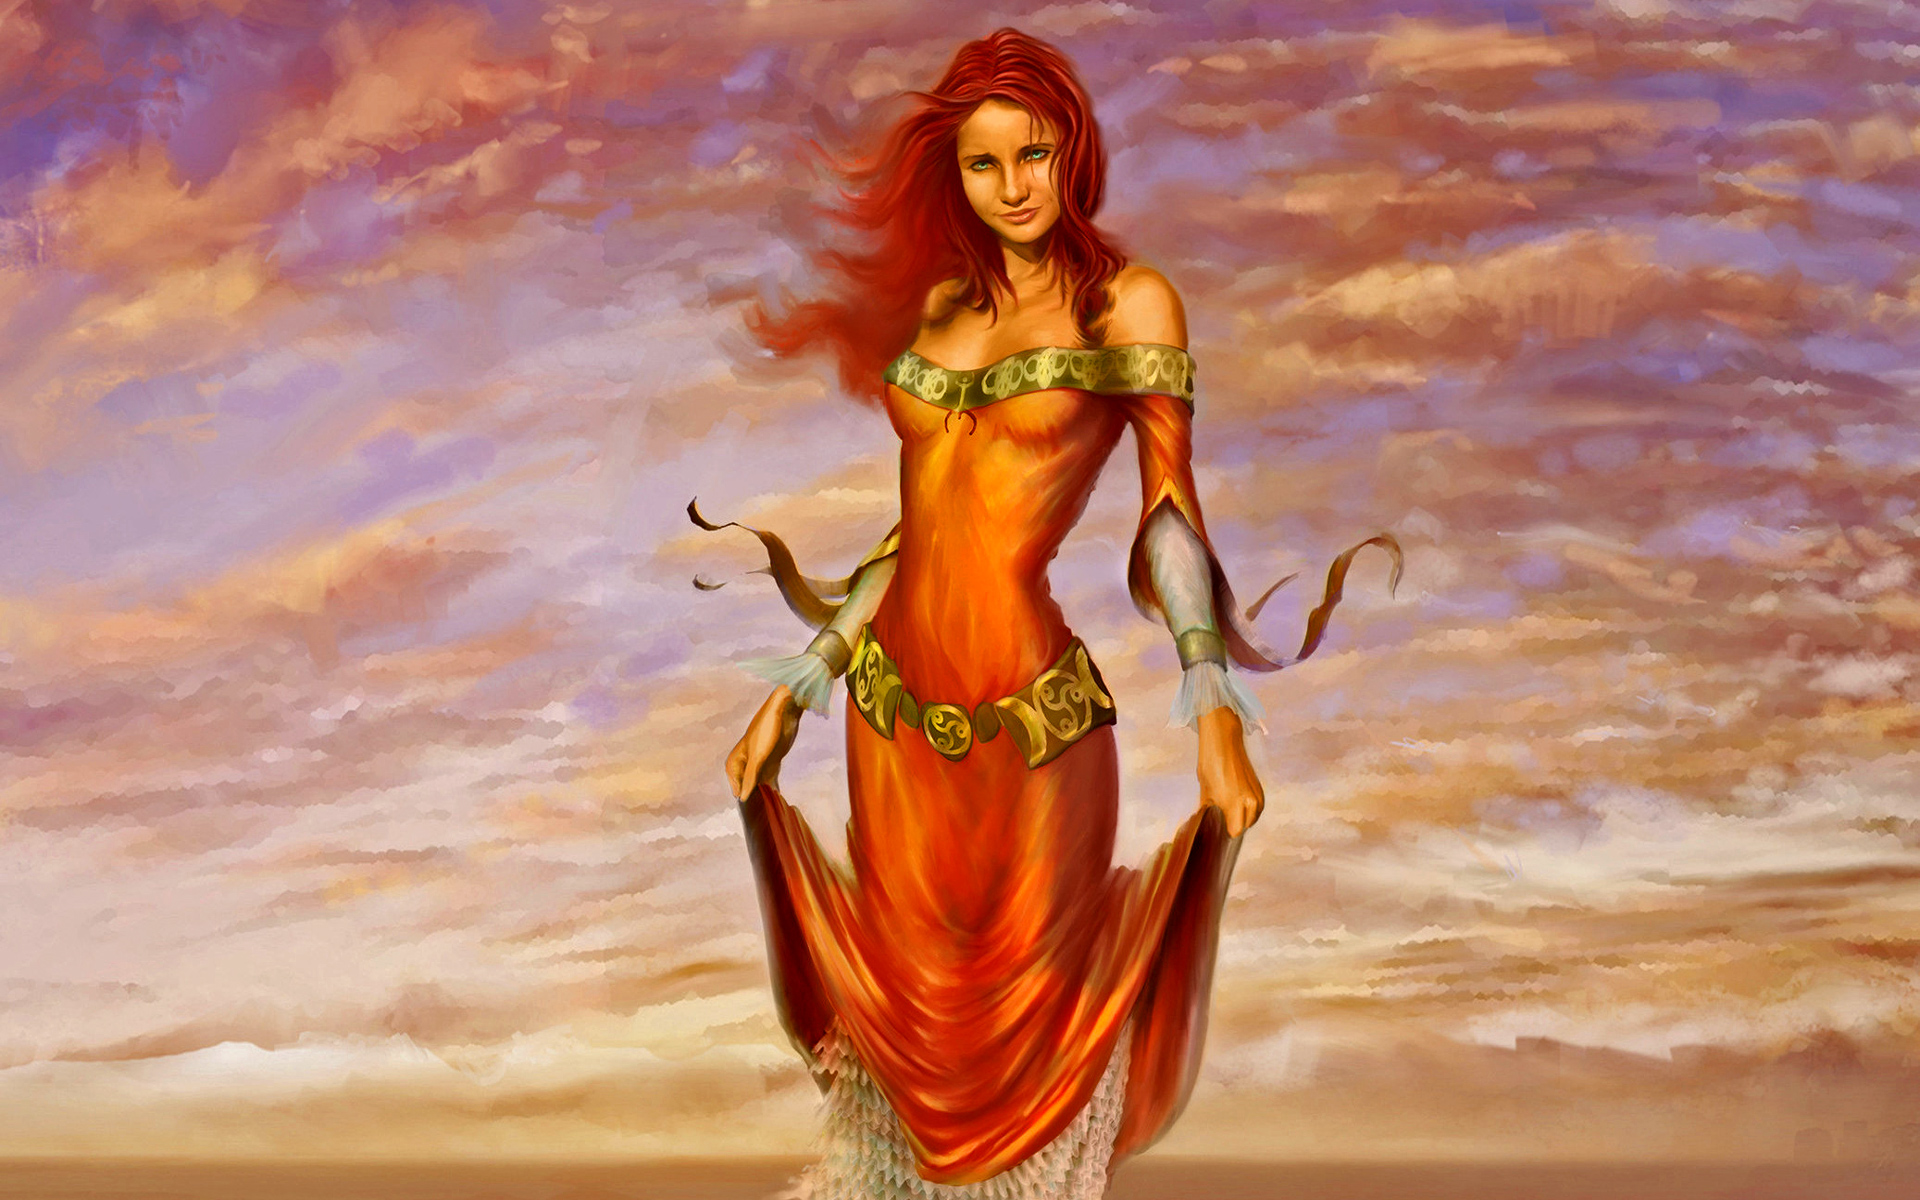 Fantasy Women Art by Barreaux Cyril